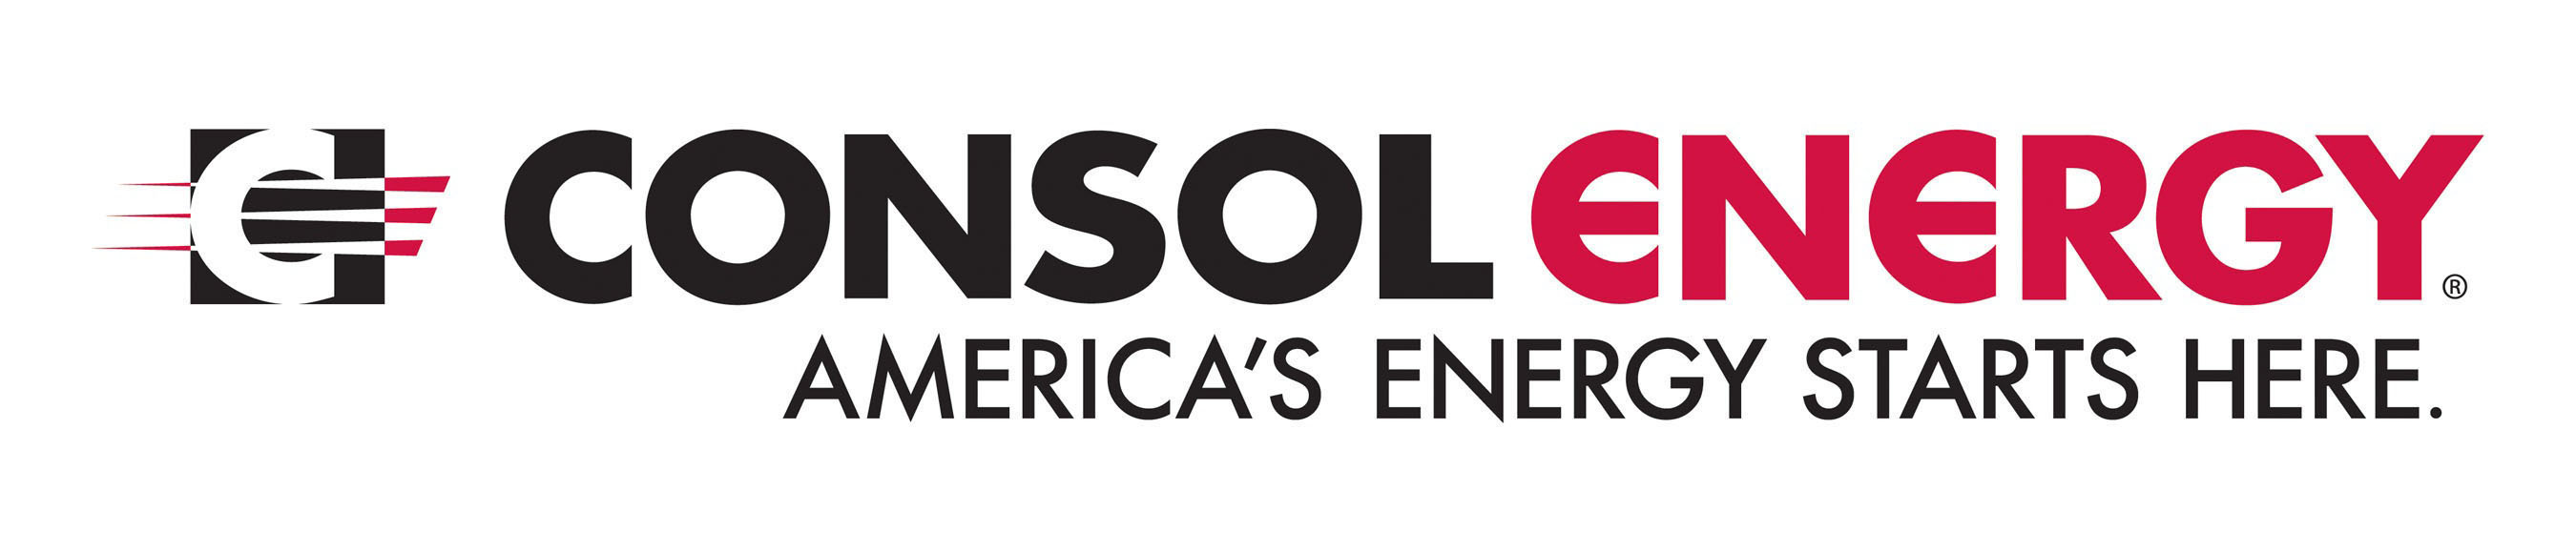 CONSOL Energy Logo.